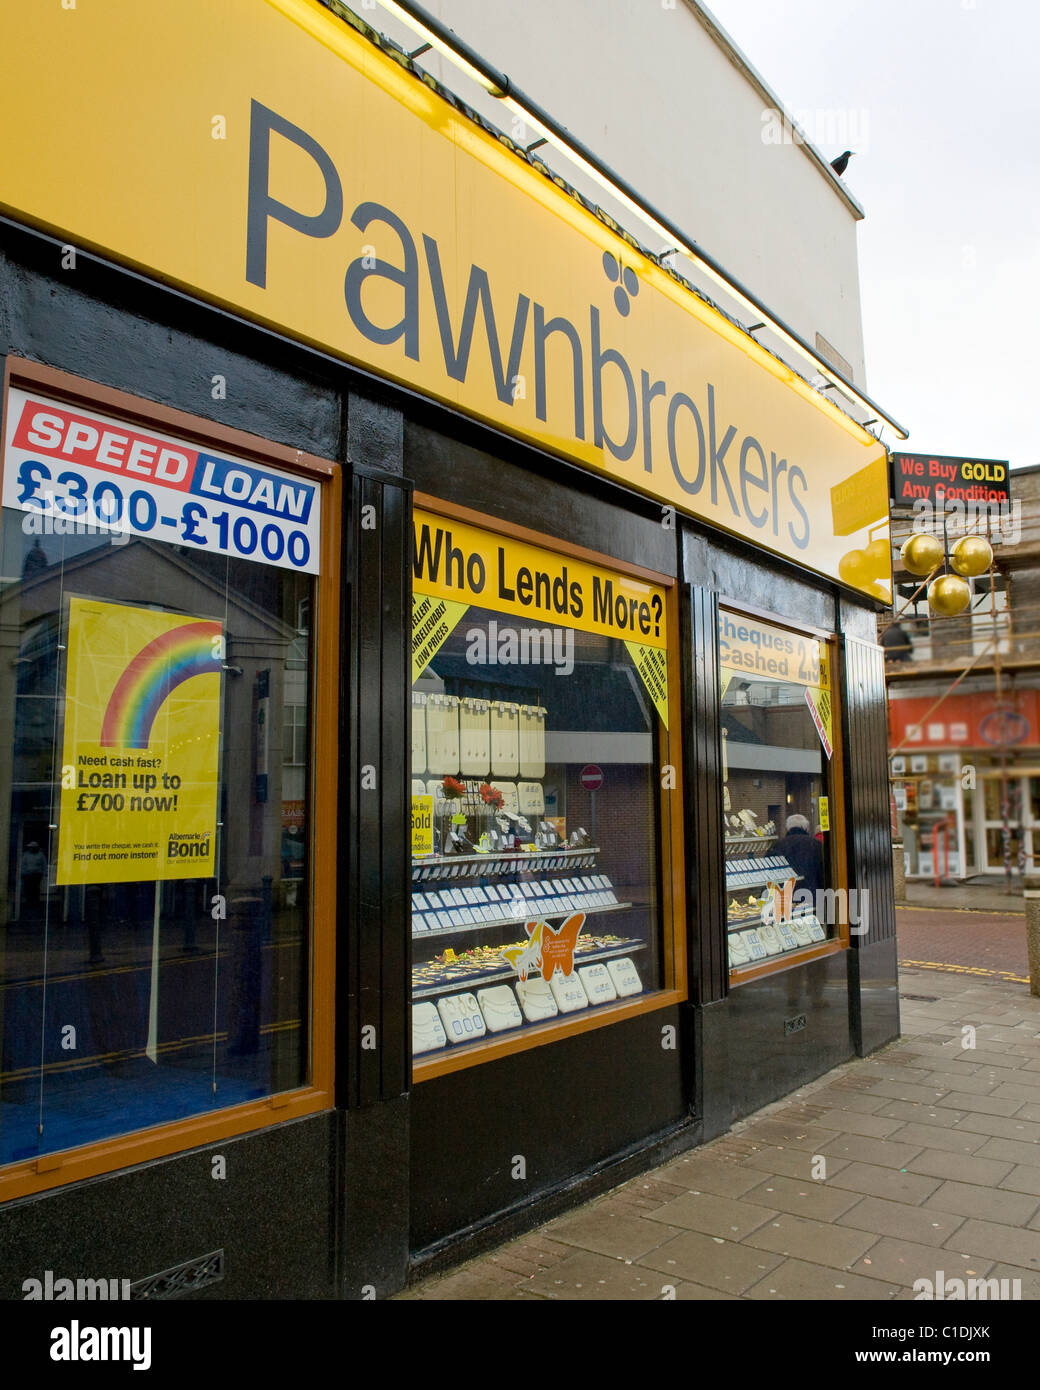 Pawnbroker's Shop lending sign Stock Photo